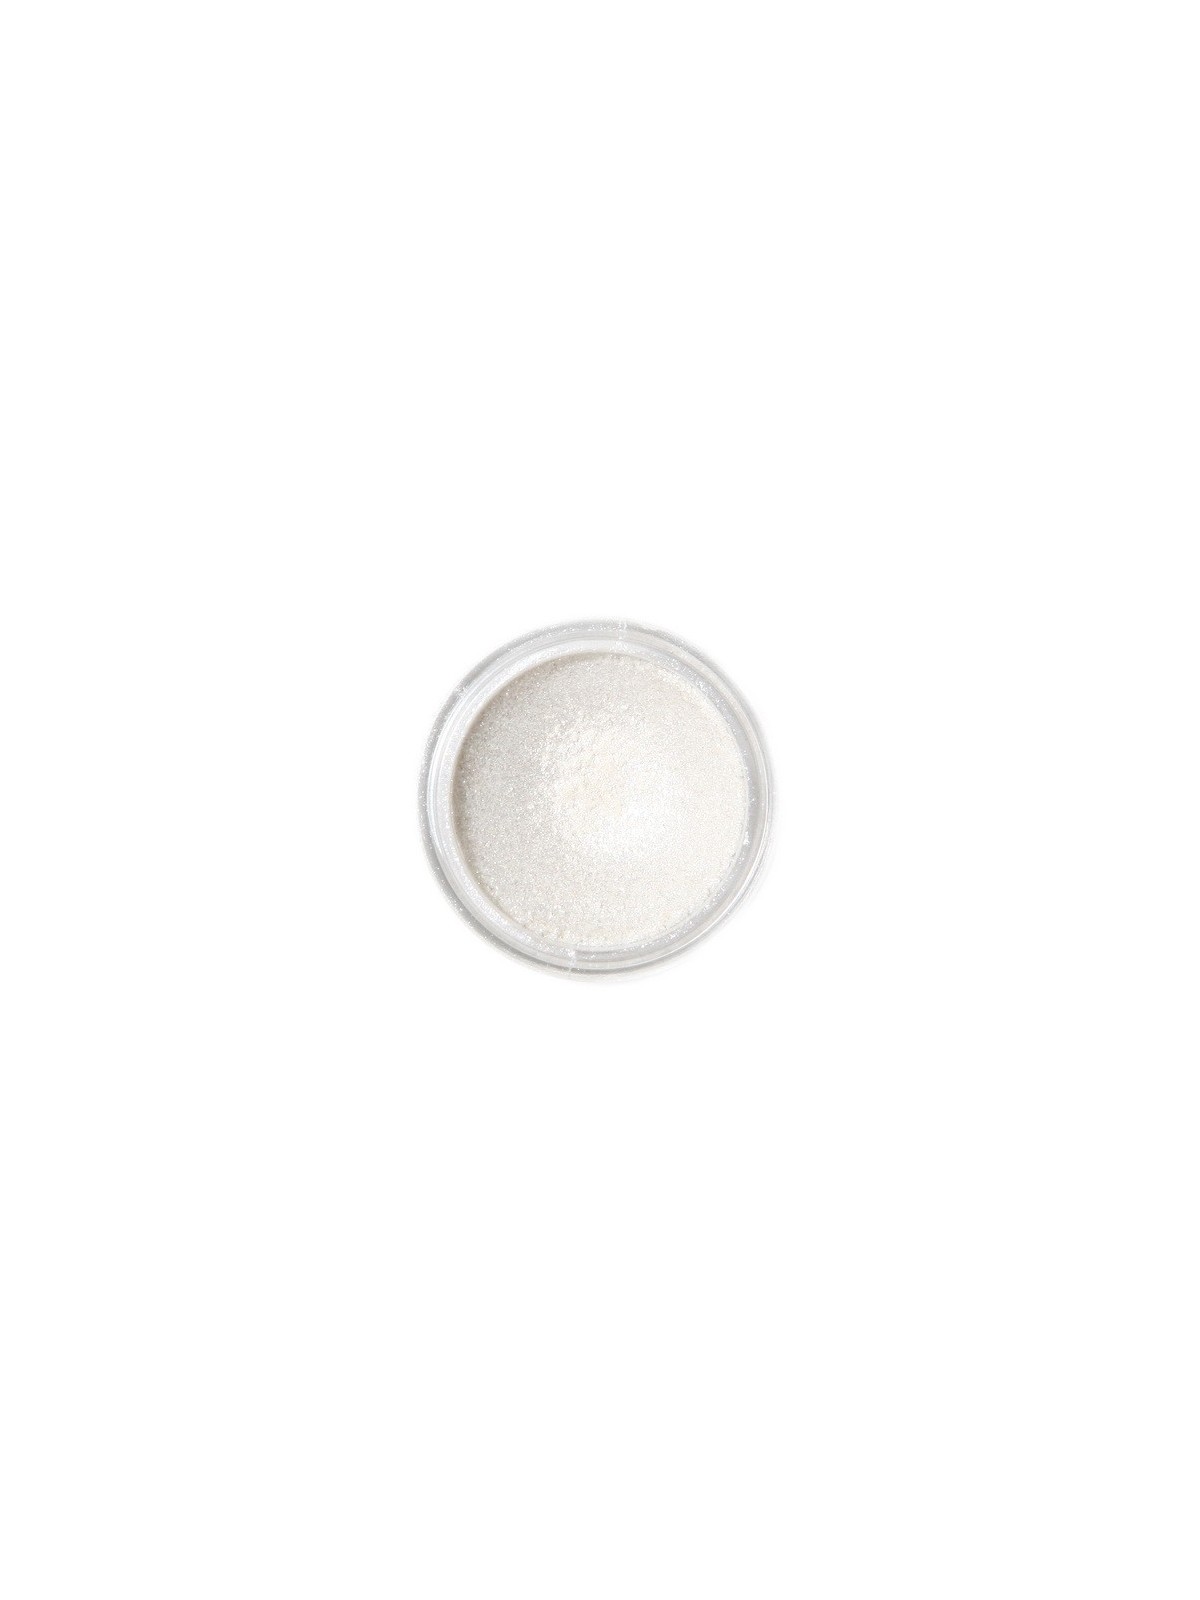 Dekorativ Staub perlweiß Fractal - Sparkling White, Szikrázó fehér (3,5 g)